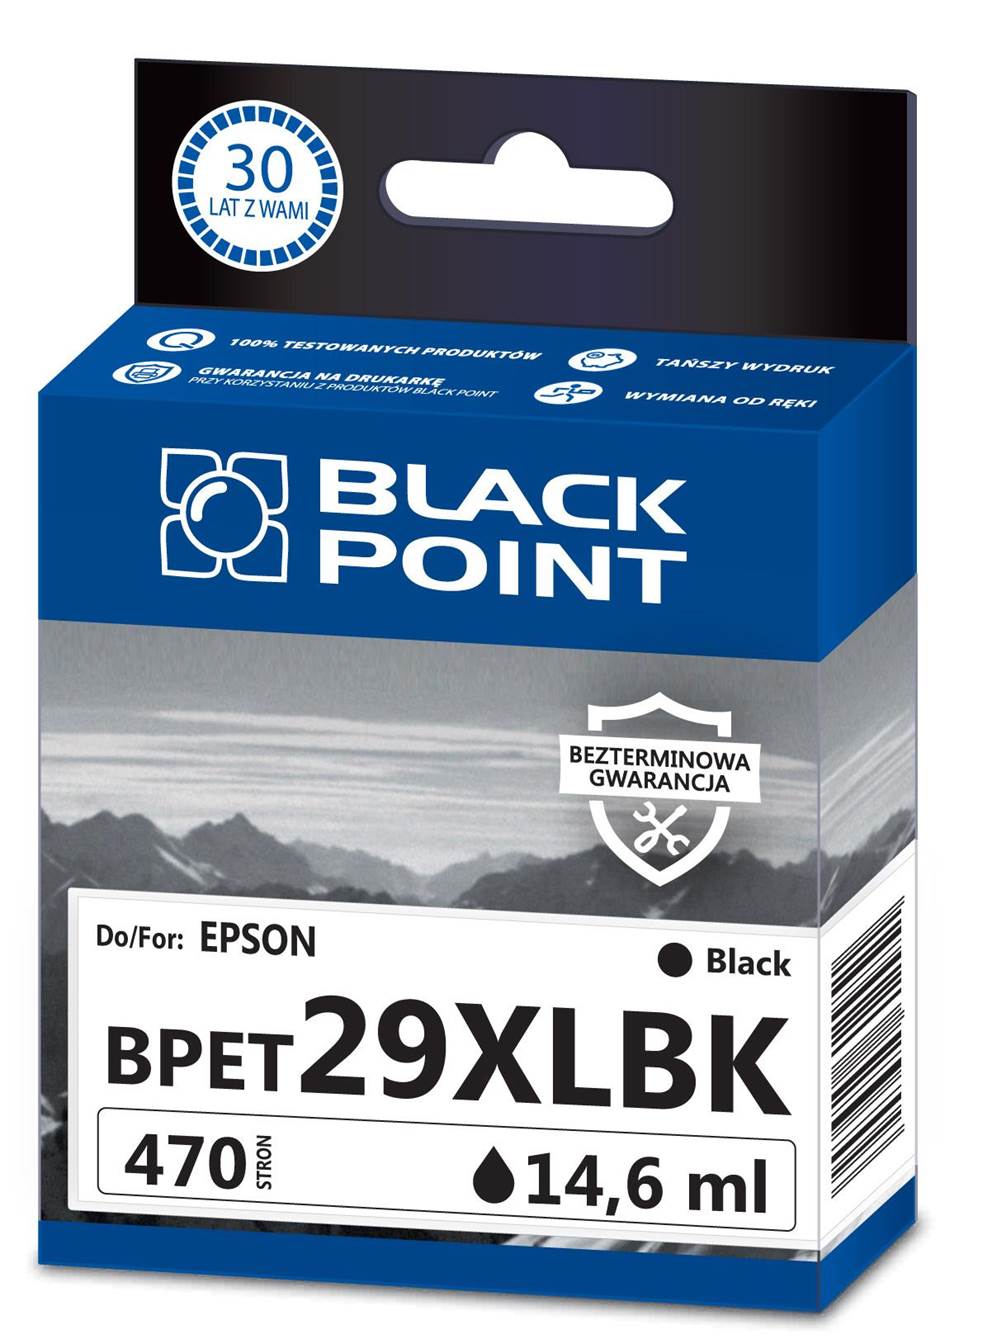 Kartridż black Black Point BPET29XLBK (Epson C13T29914012), 470 str.